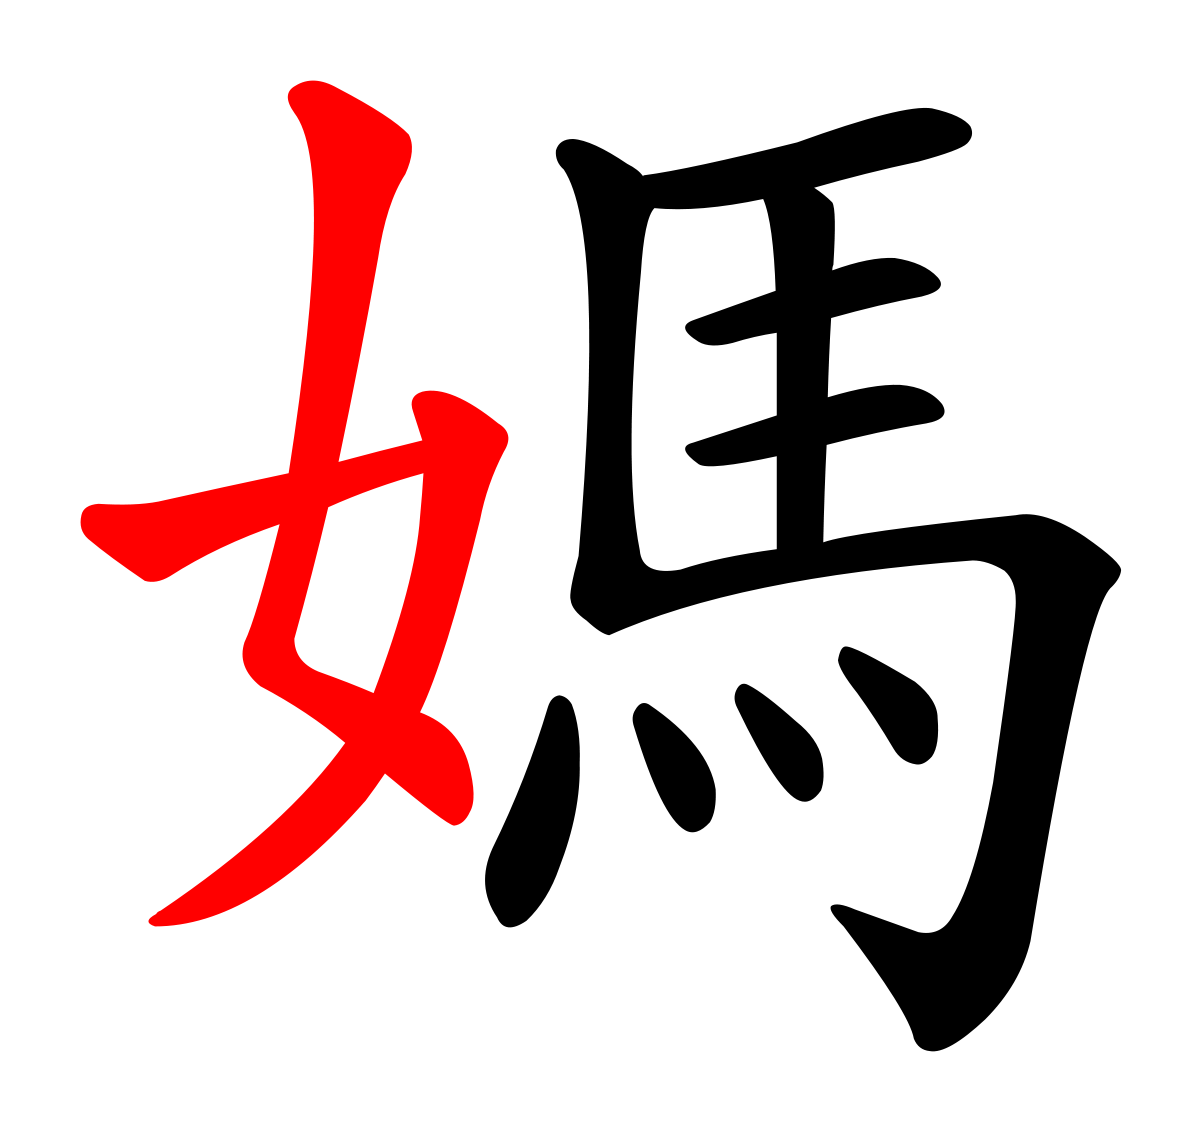 Radical (Chinese characters) - Wikipedia